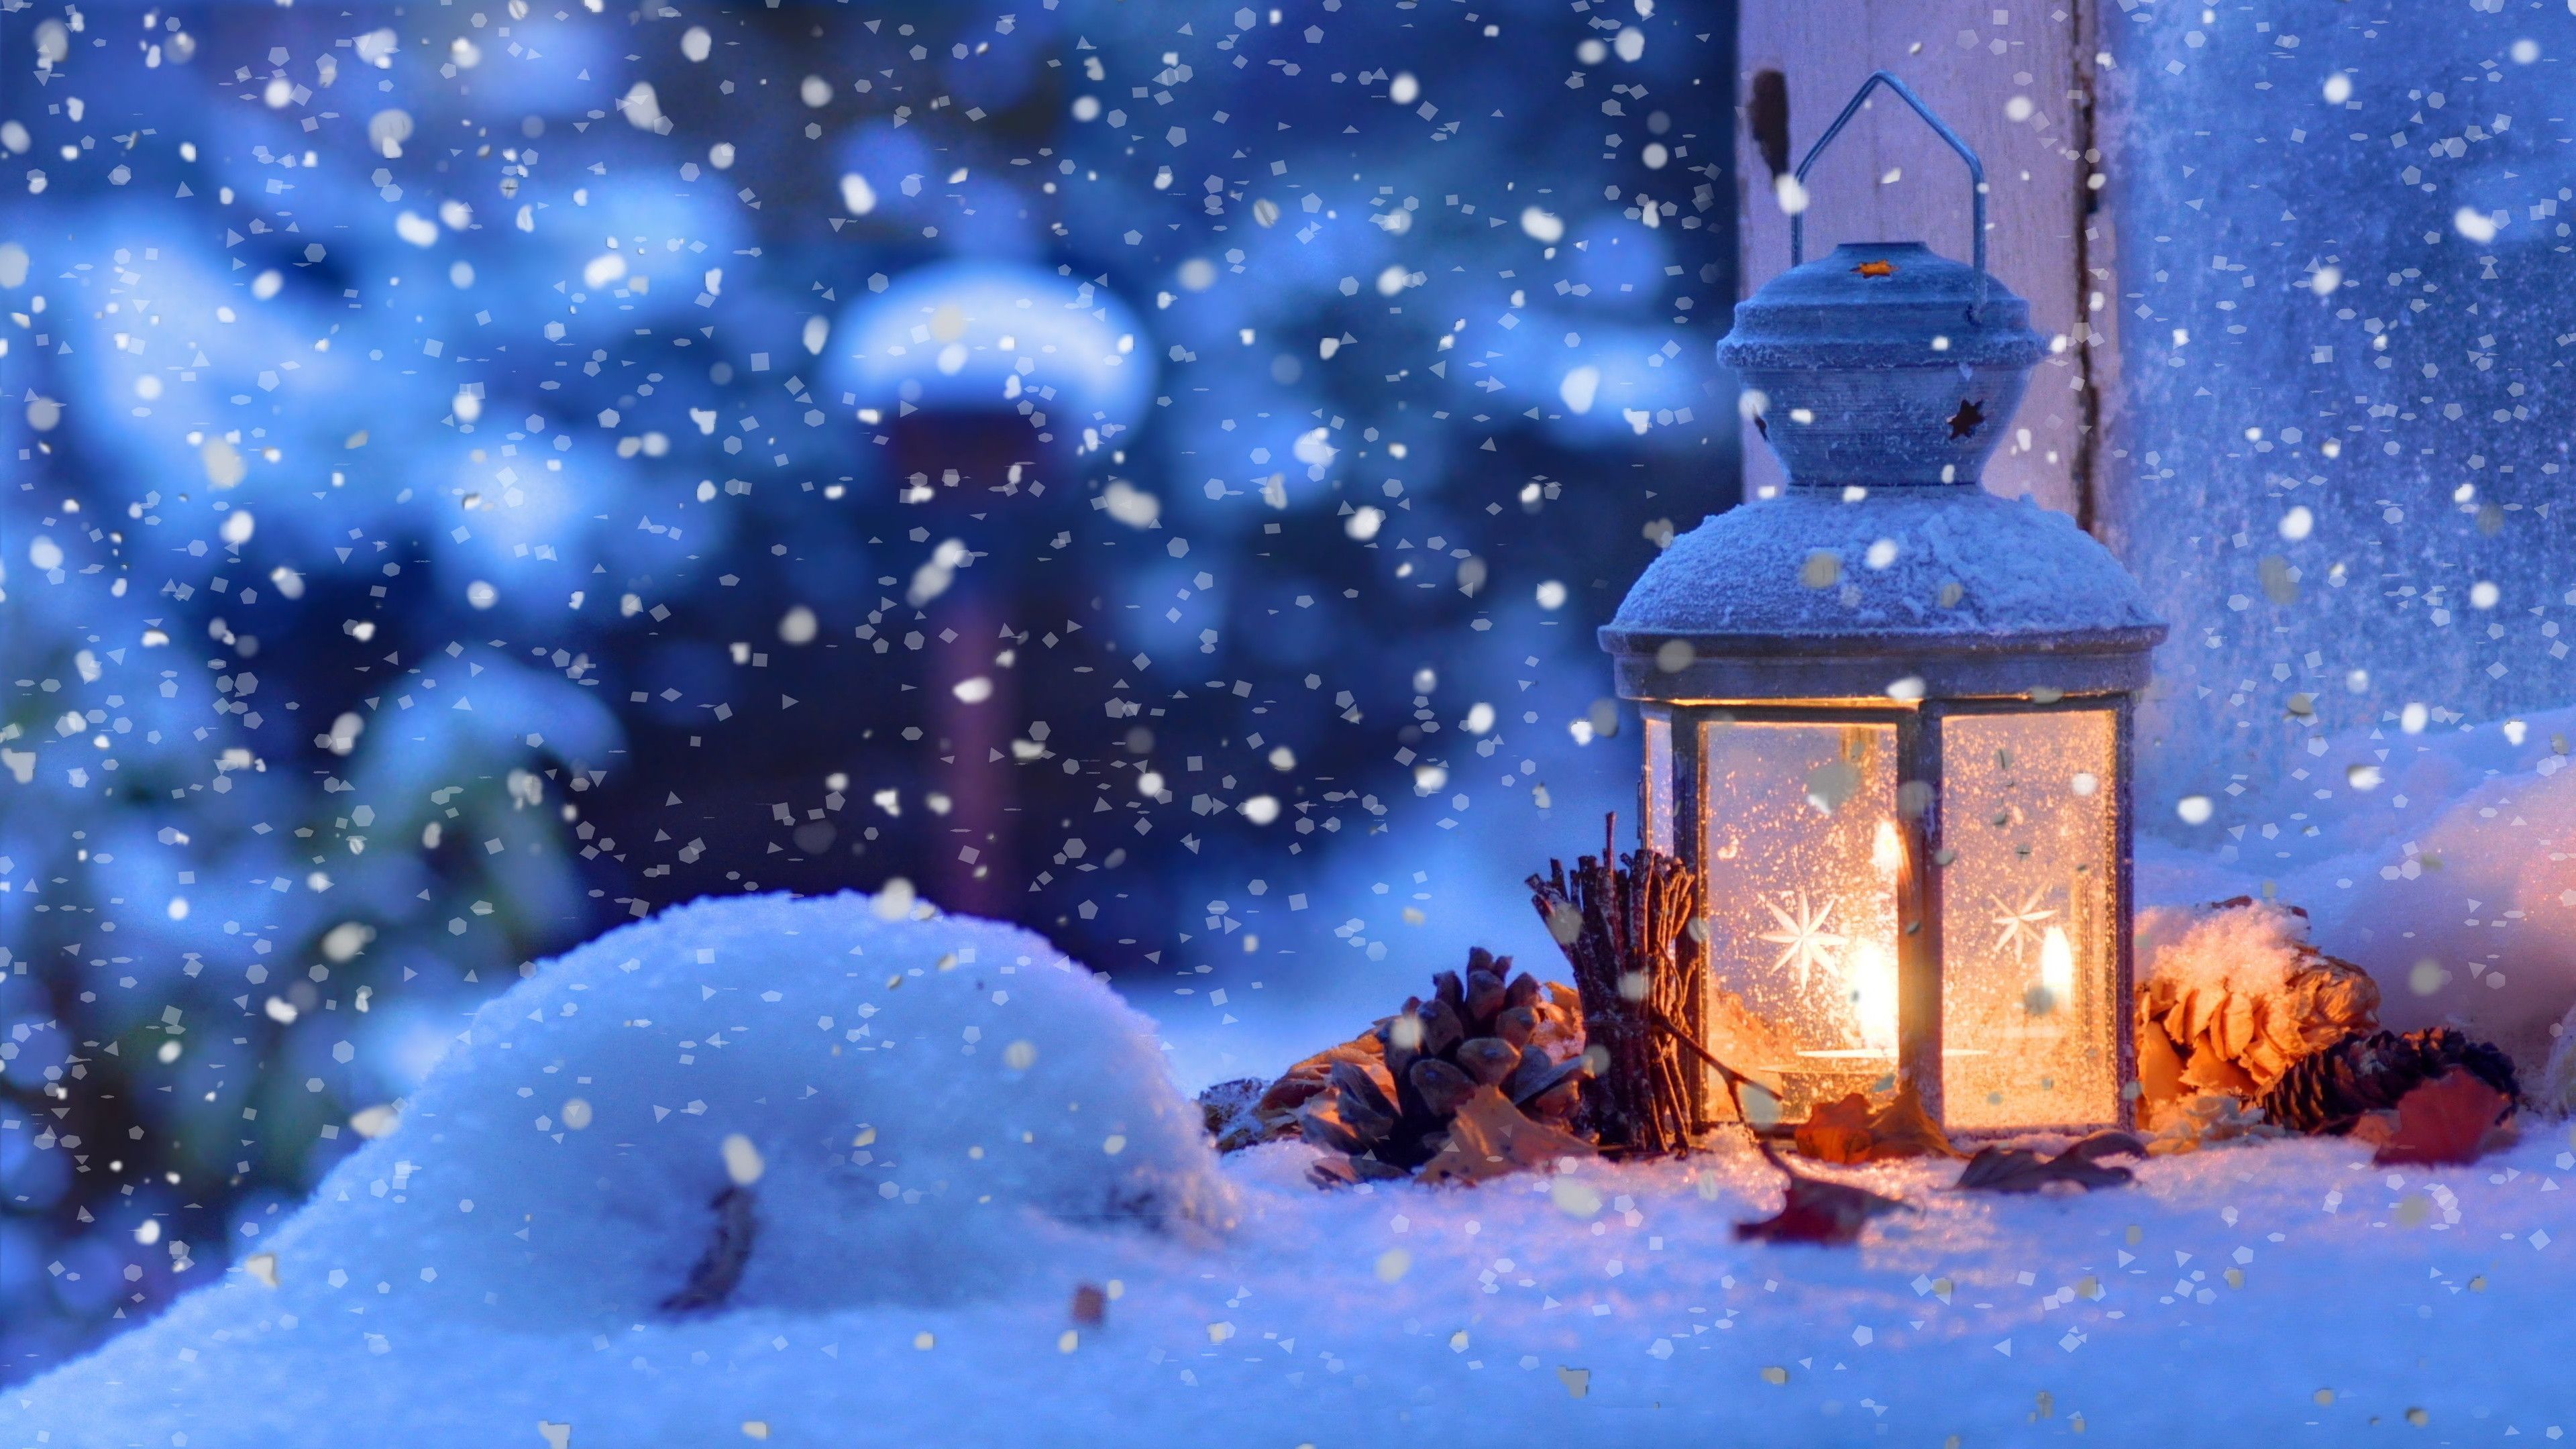 Snow Desktop Wallpaper. Christmas cover photo, Winter facebook covers, Winter cover photo